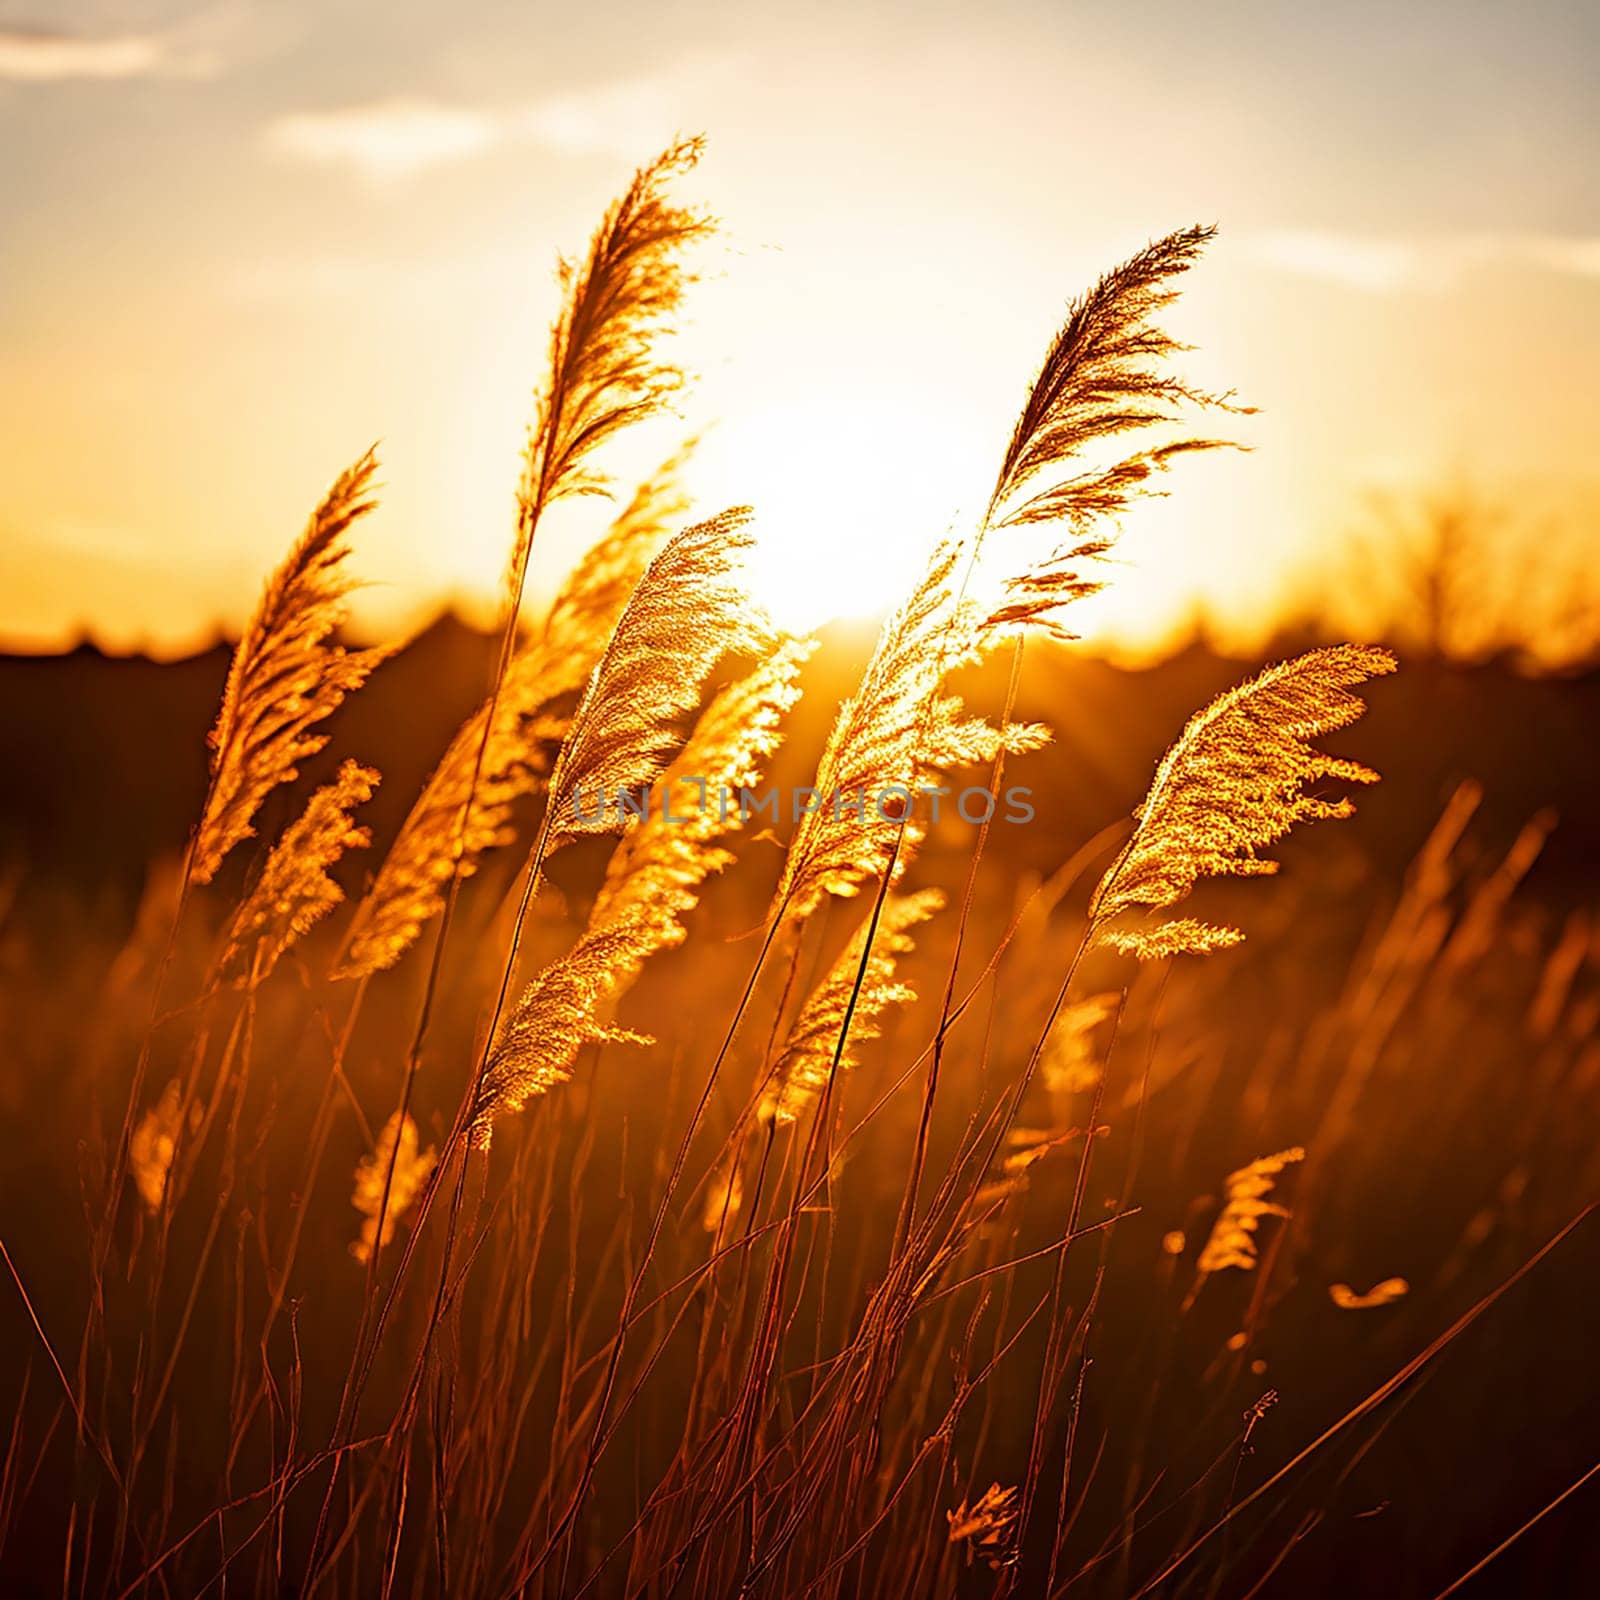 Nature's Dance: Wildgrass Swaying in the Gentle Sunlight